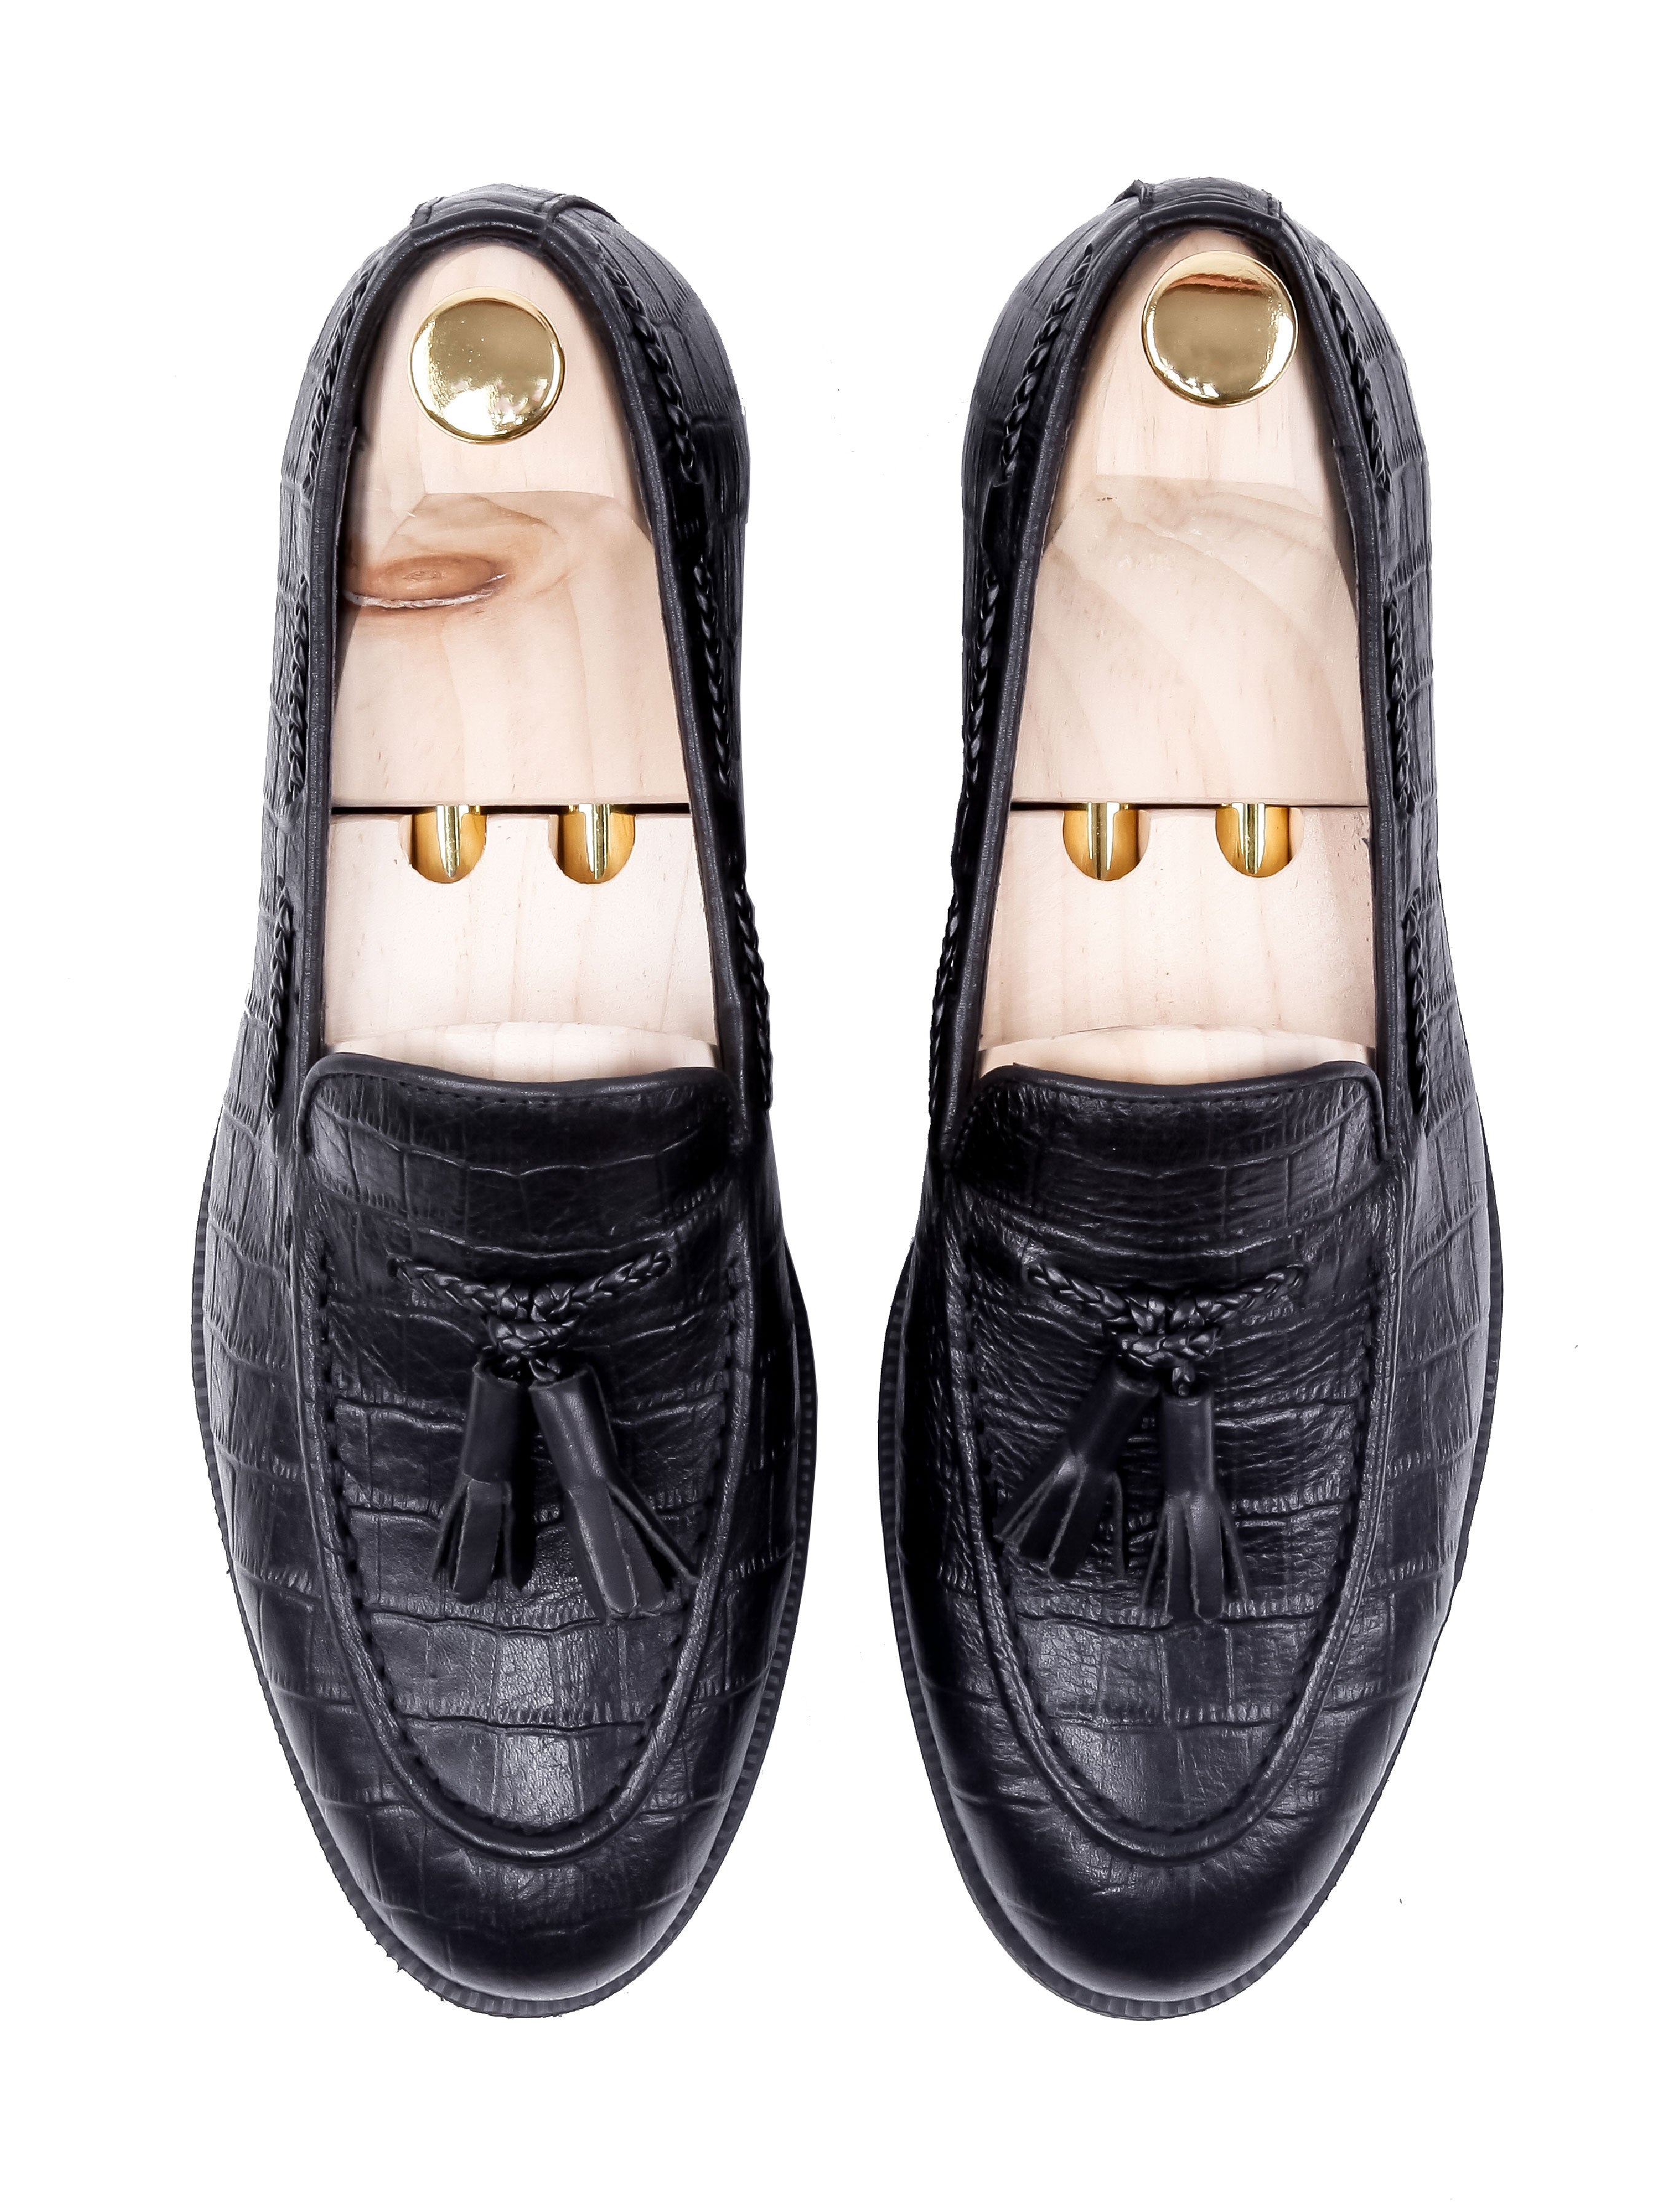 Tassel Loafer - Black Croco Leather (Crepe Sole) - Zeve Shoes